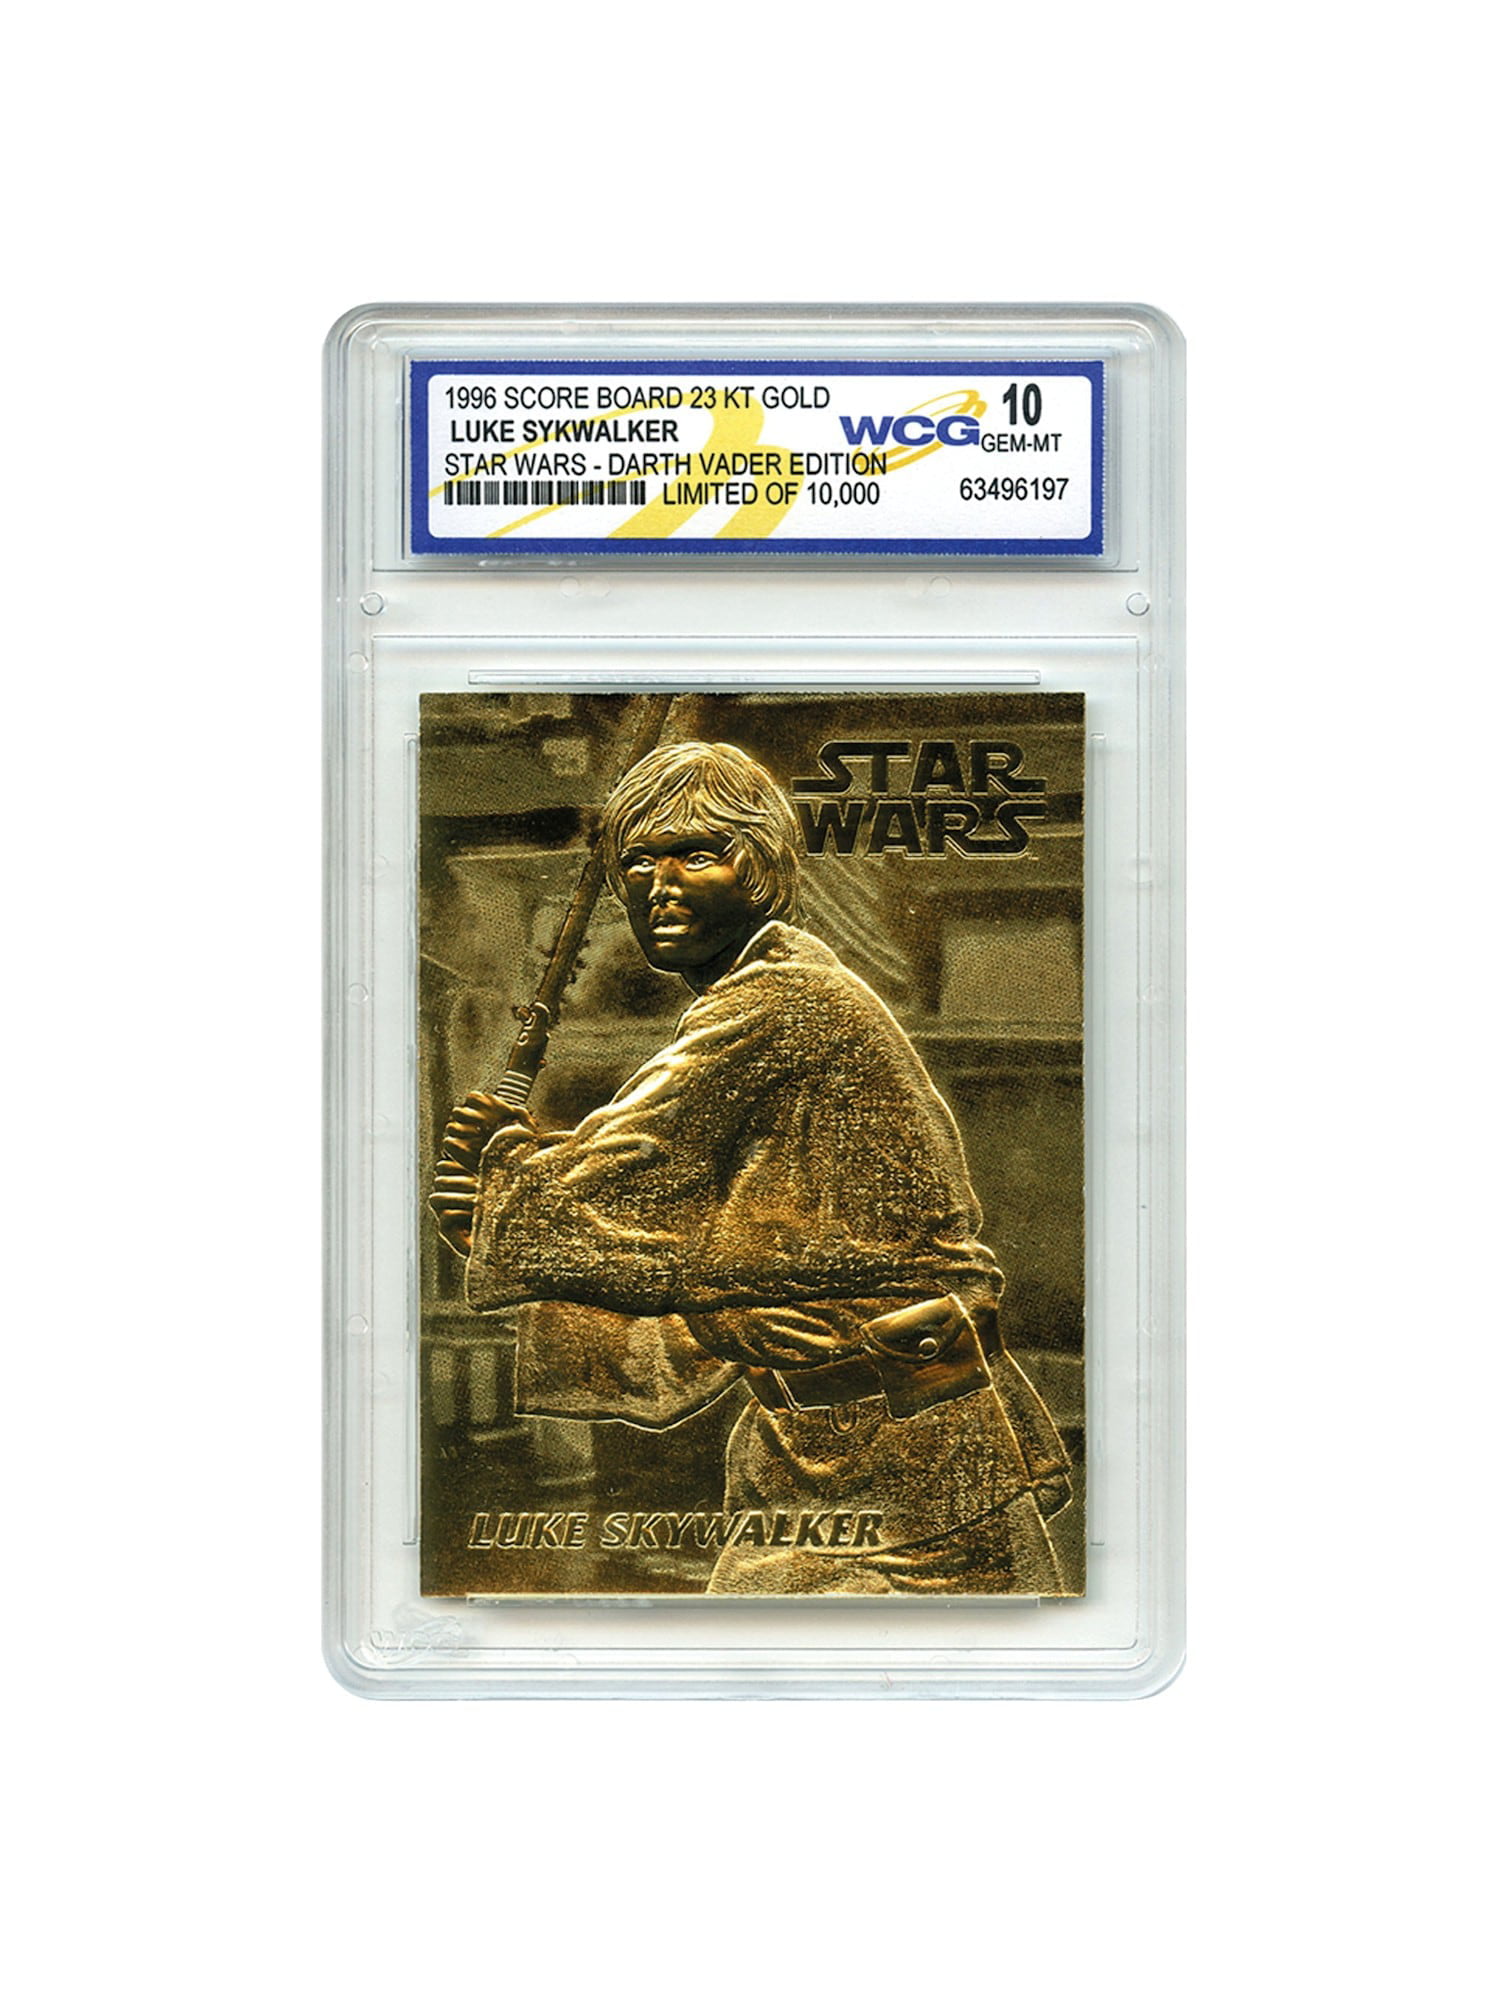 STAR WARS Millennium Falcon Genuine 23K GOLD CARD $8.95 Officially Licensed 